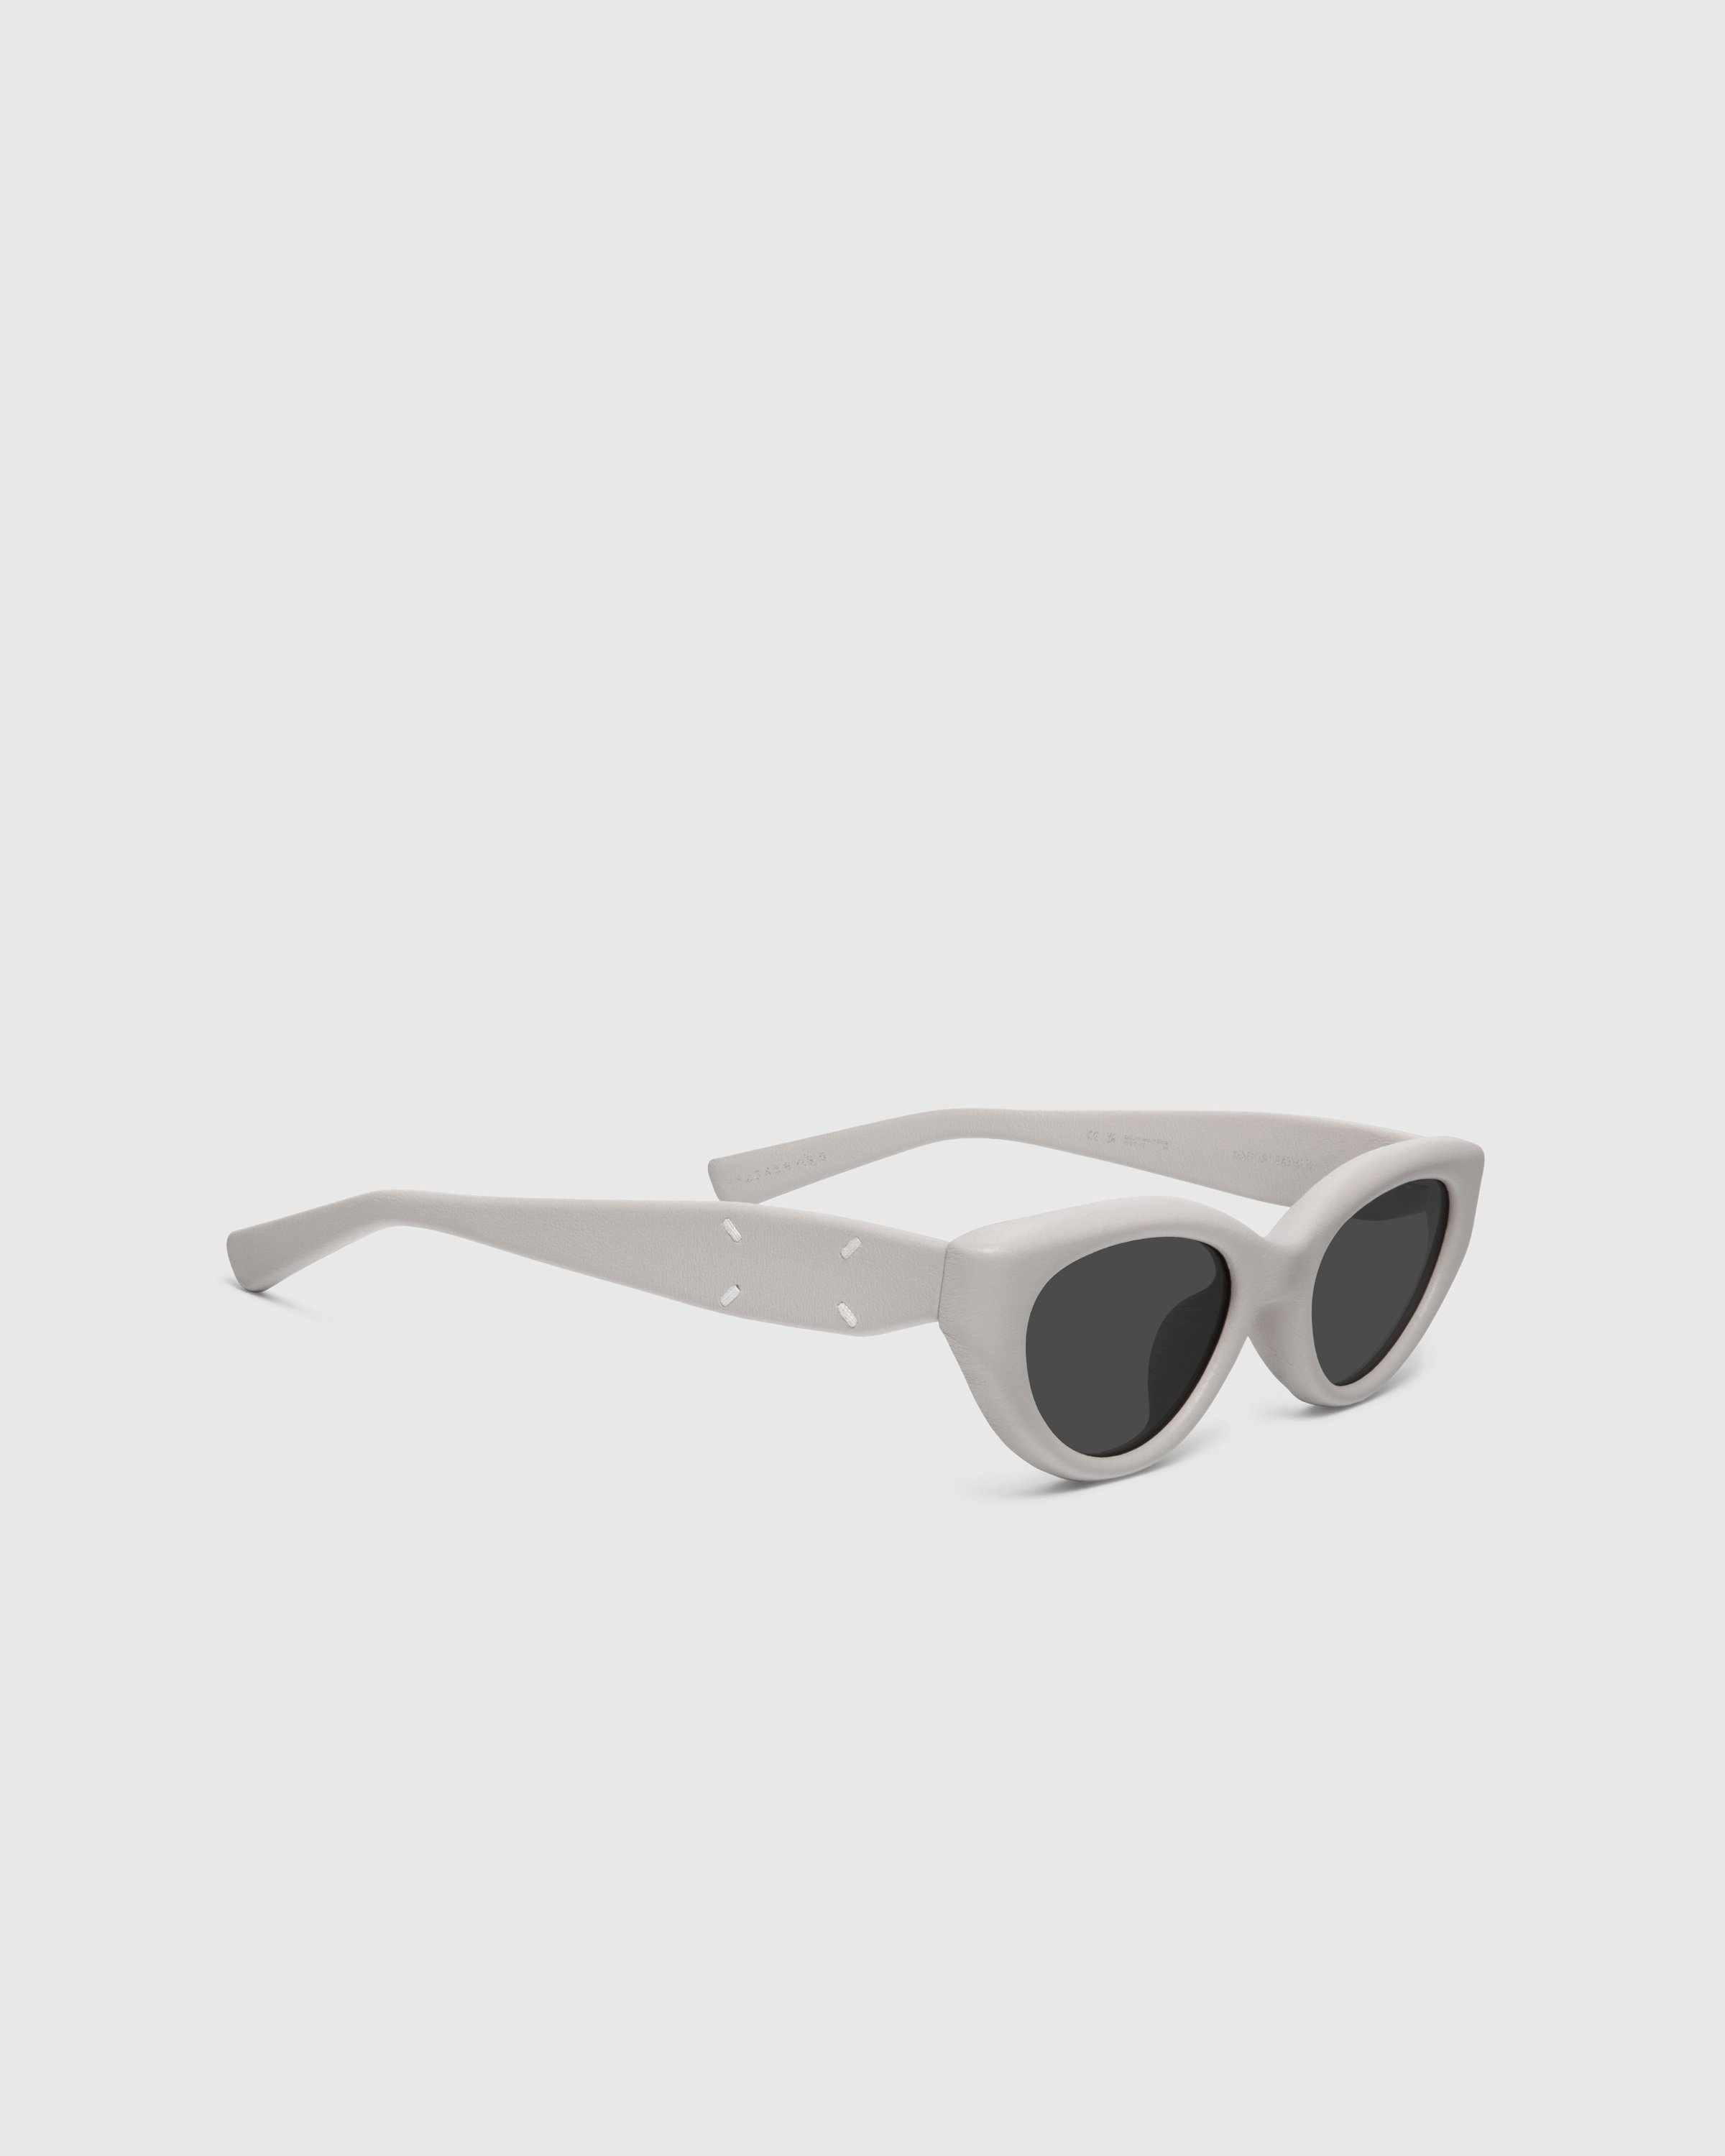 Maison Margiela x Gentle Monster - Sunglasses MM108 LEATHER-LIV1 - Accessories - White - Image 2